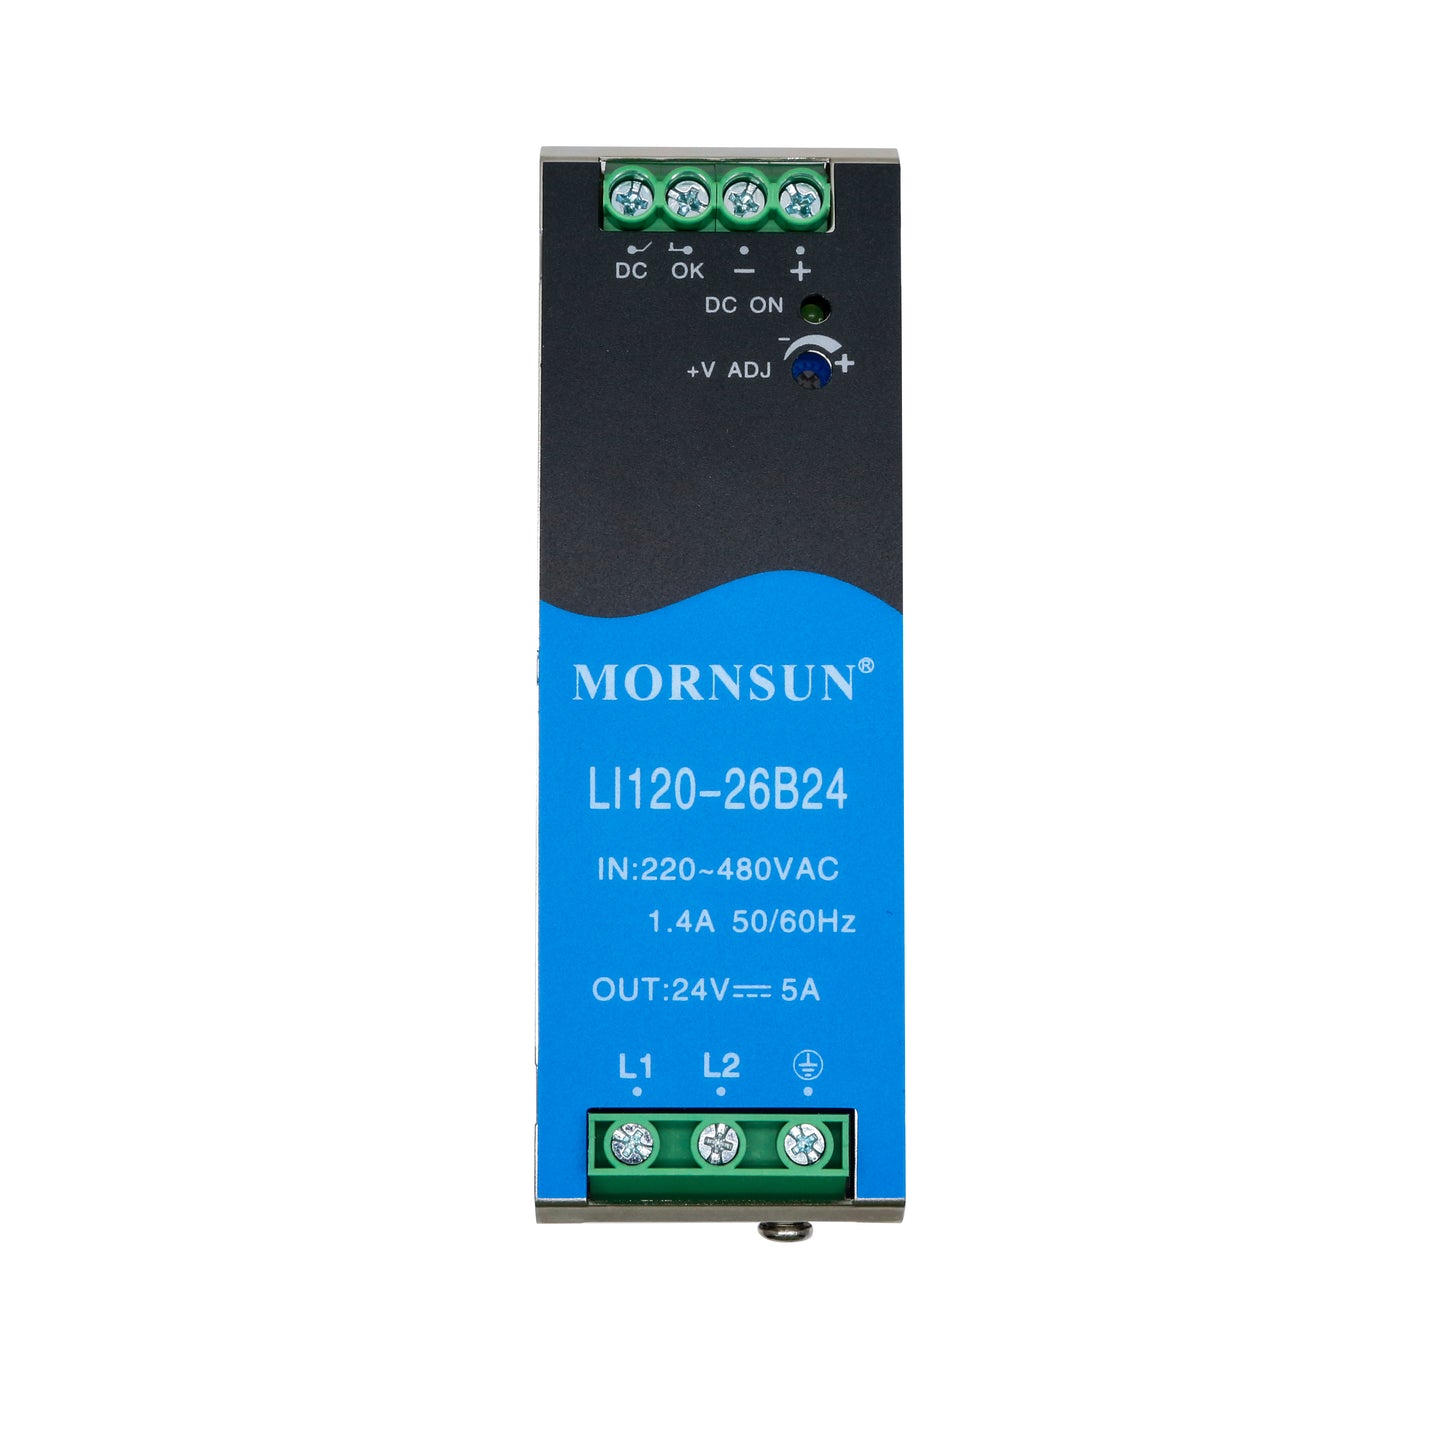 Mornsun LI120-26B12 120W 12V 10A Slim Power Supply Three Phase Industrial Din Rail Switching Power supply